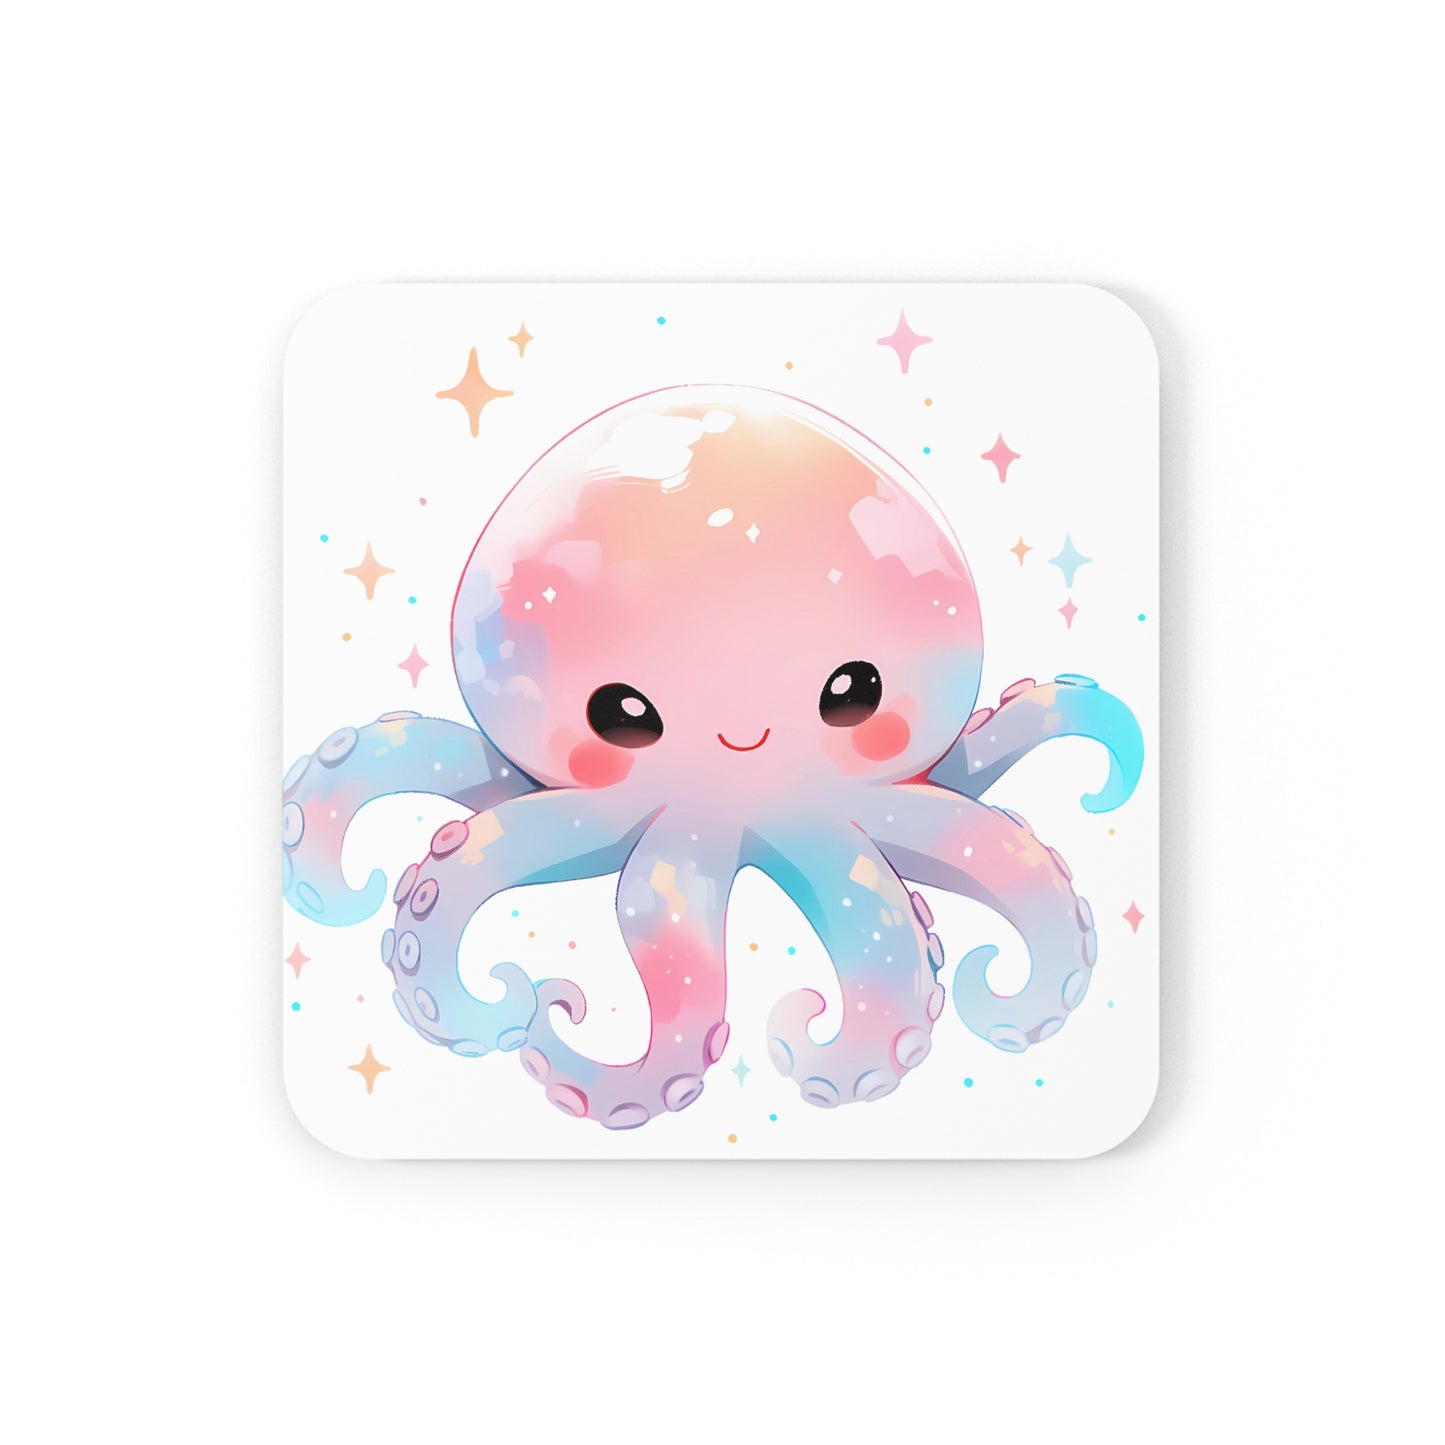 Alone Octopus - Pastel Aesthetic Coaster Set